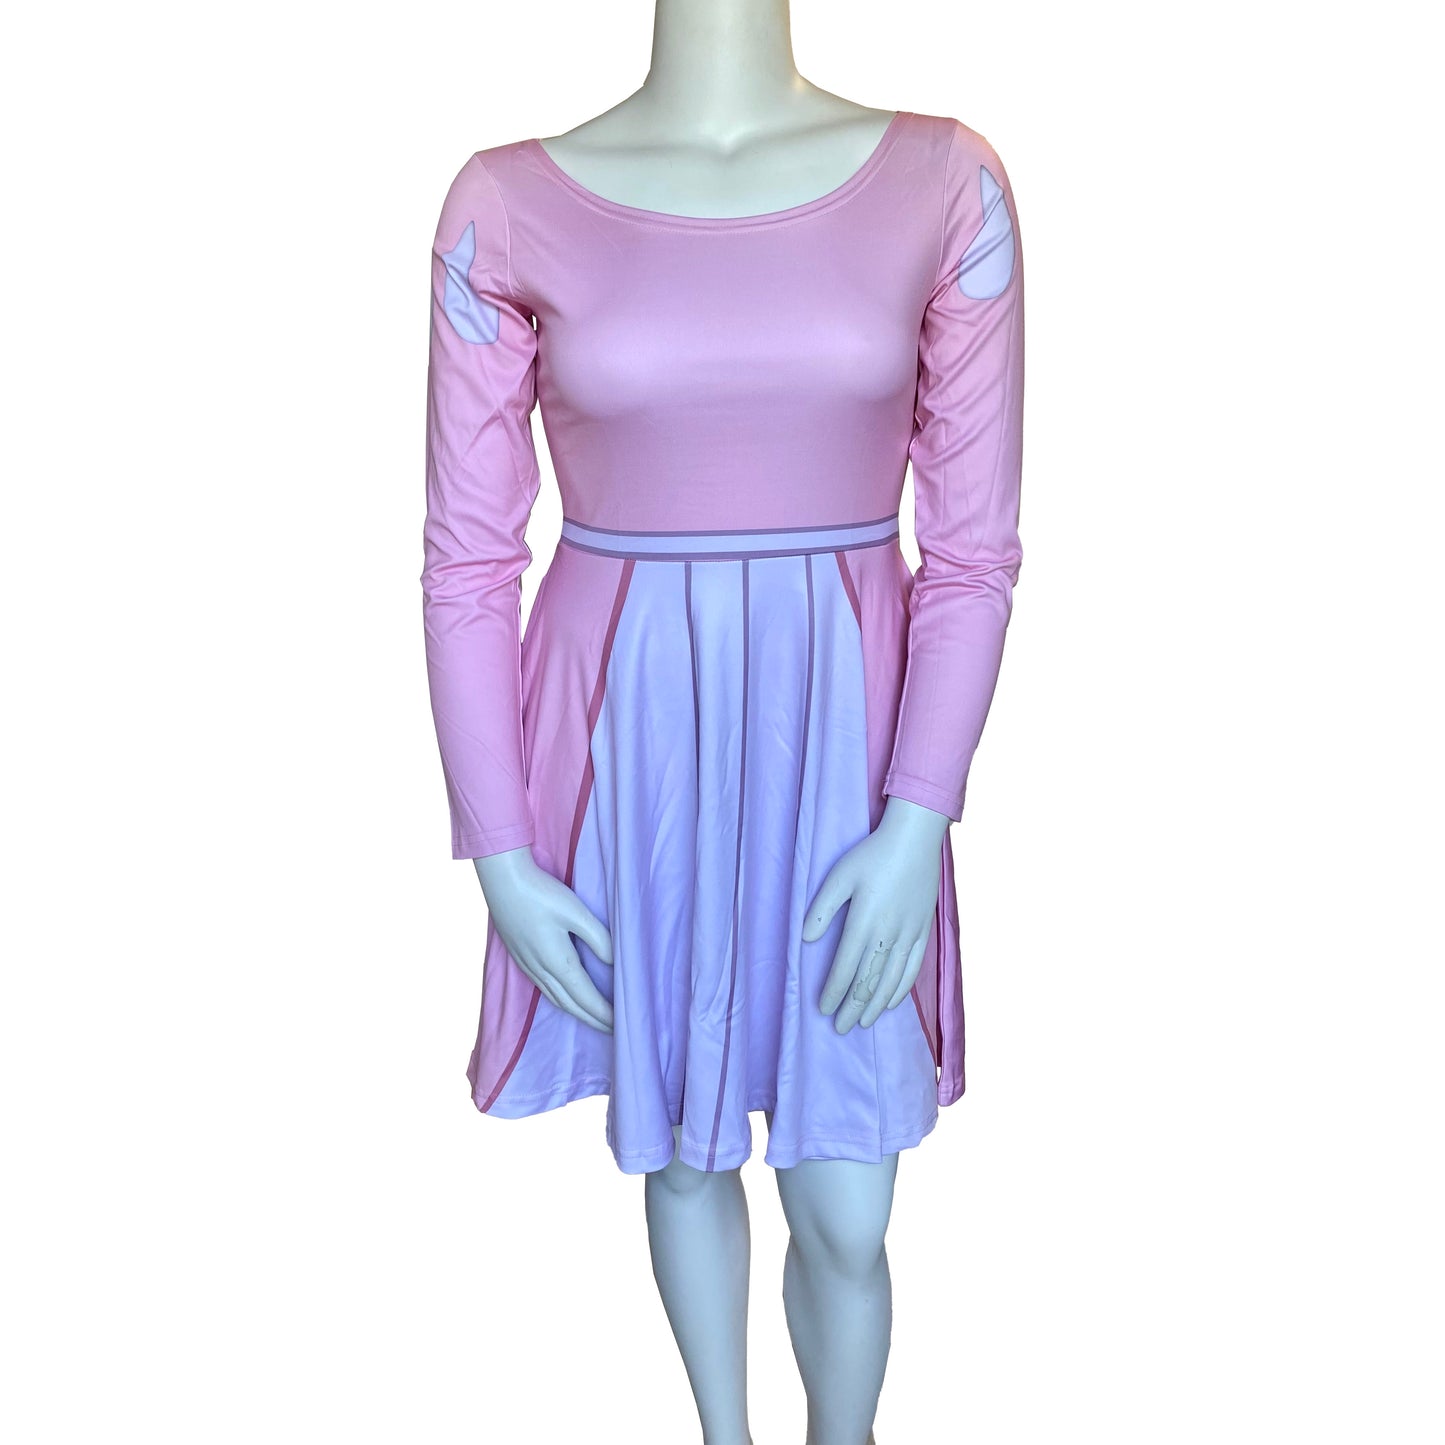 Princess Ariel Inspired Long Sleeve Skater Dress